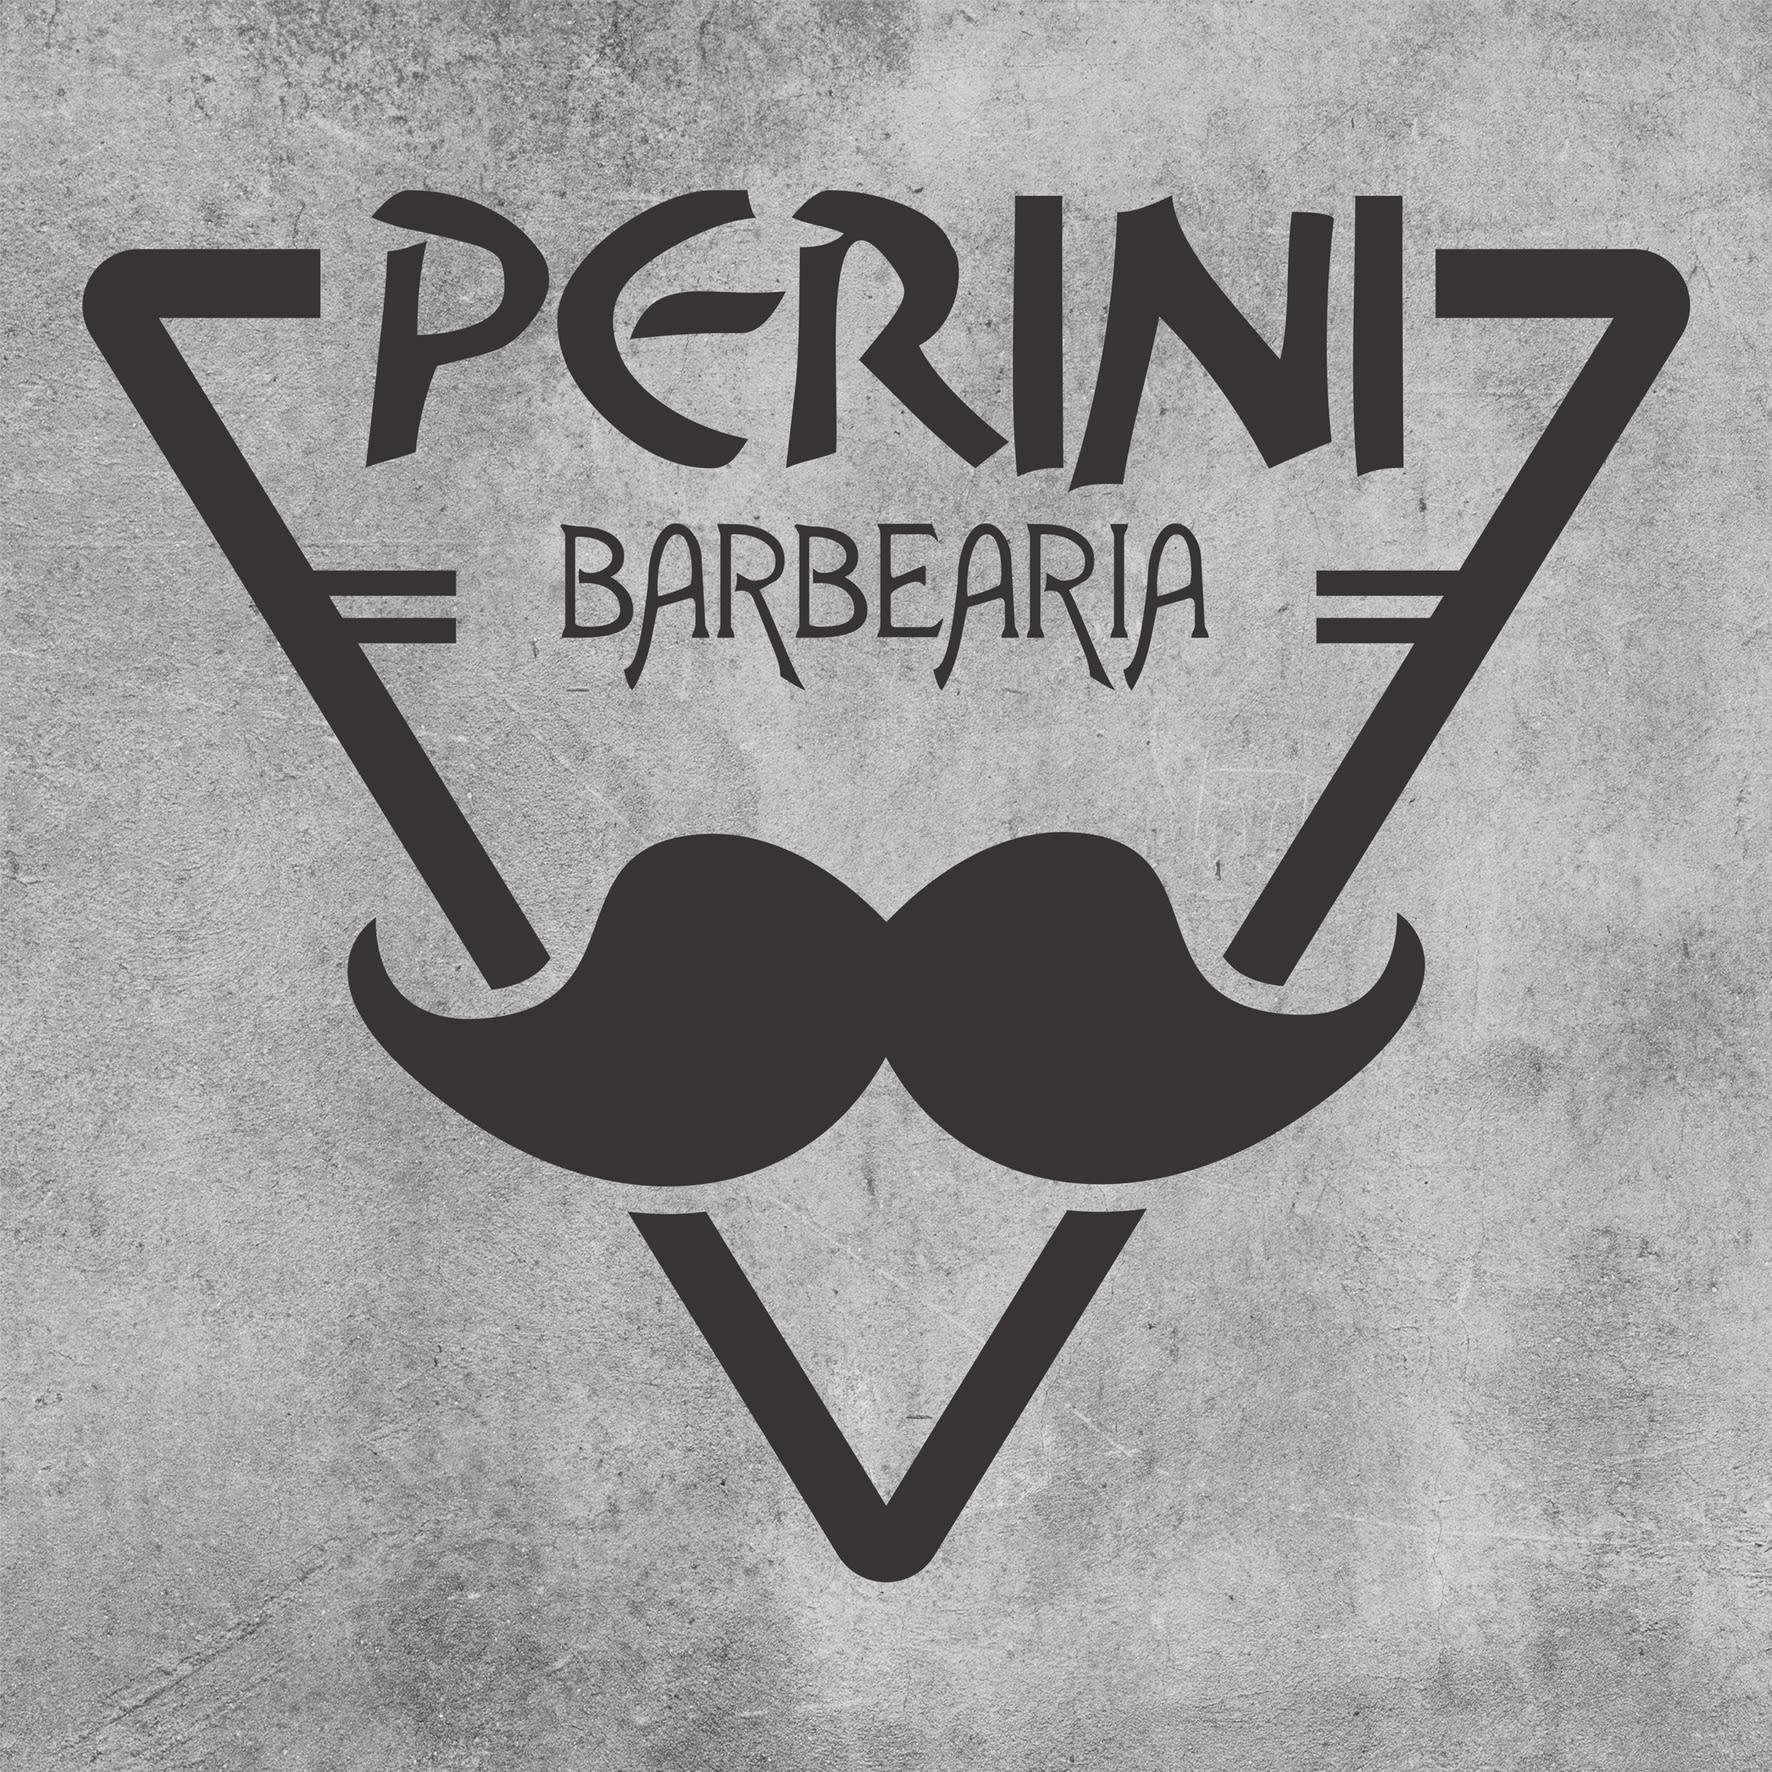 Barbearia Perini